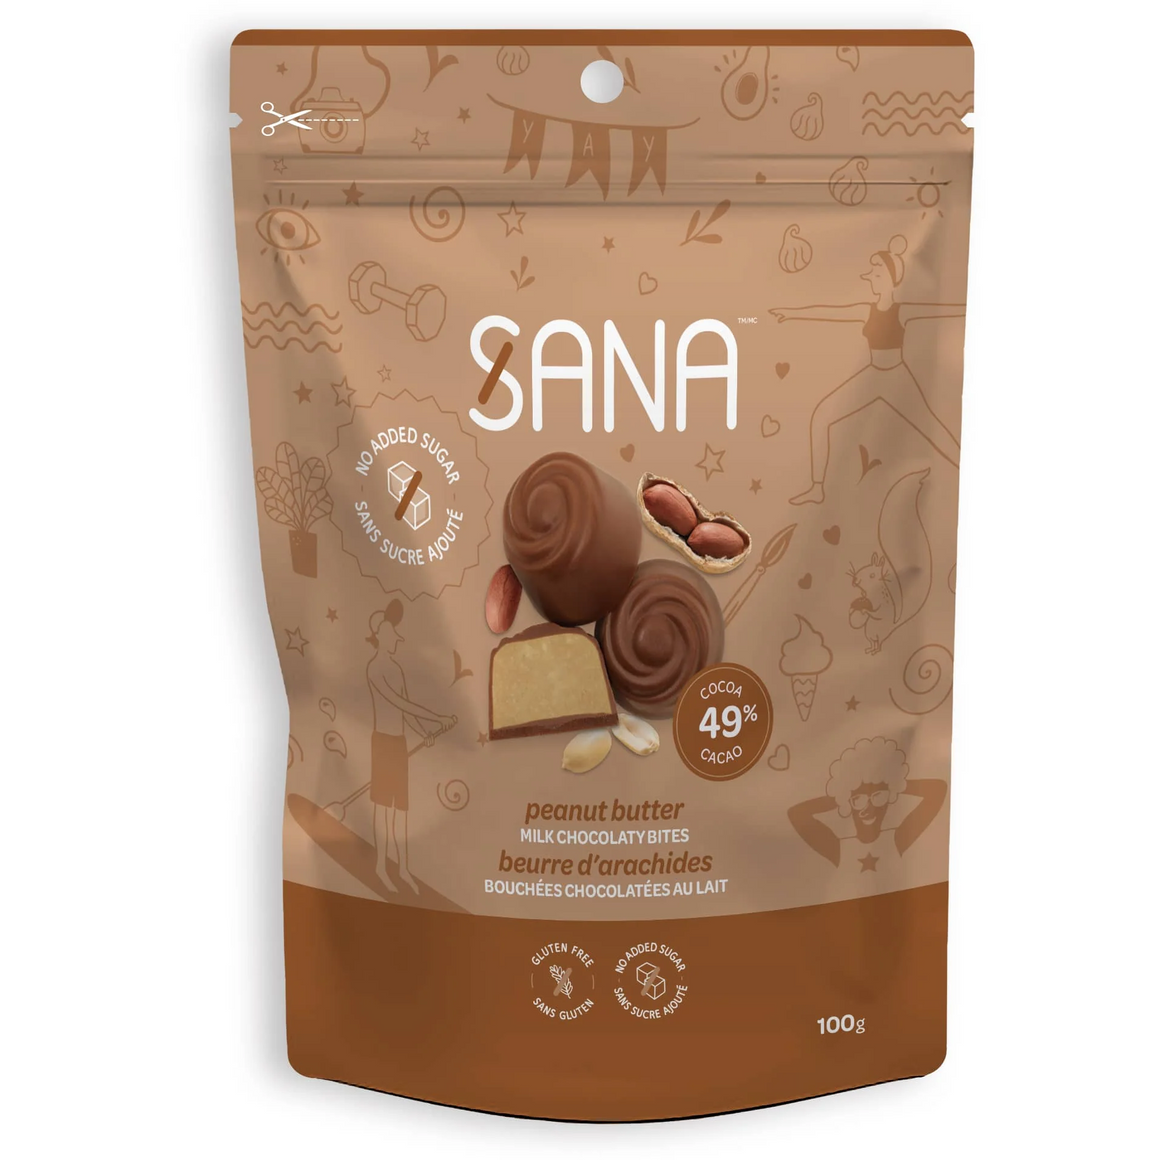 Sana - Chocolaty bites - Milk Chocolate Peanut Butter - 100g